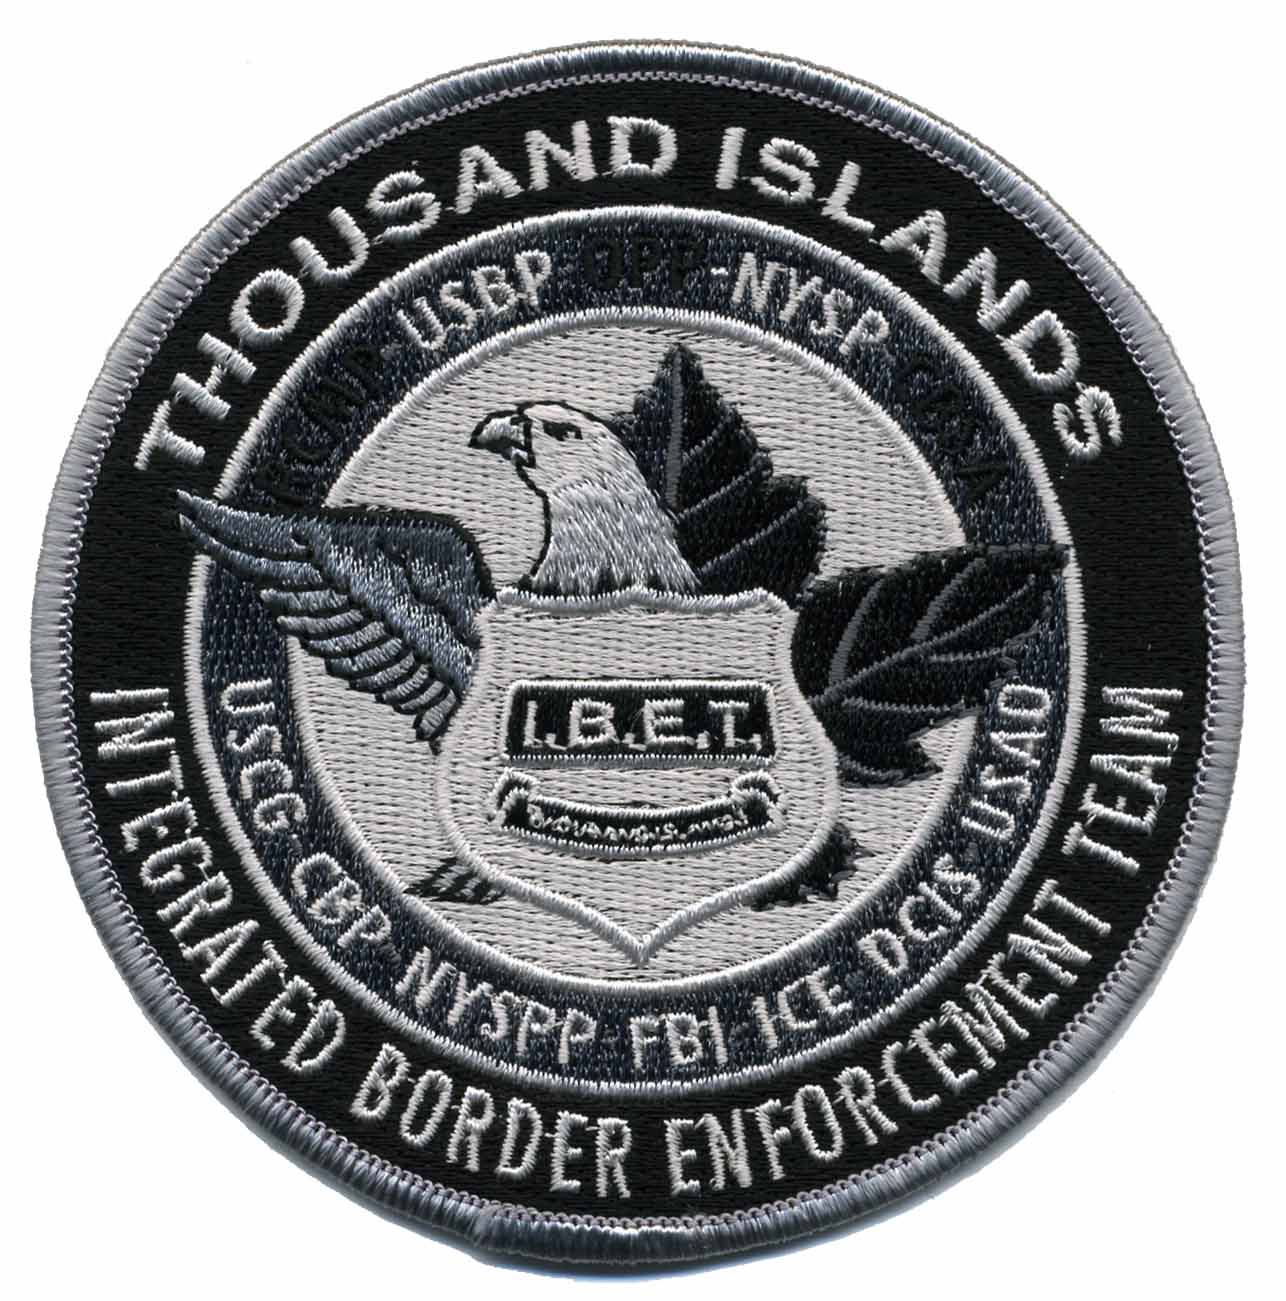 Thousand Islands Integrated Border Enforcement Team